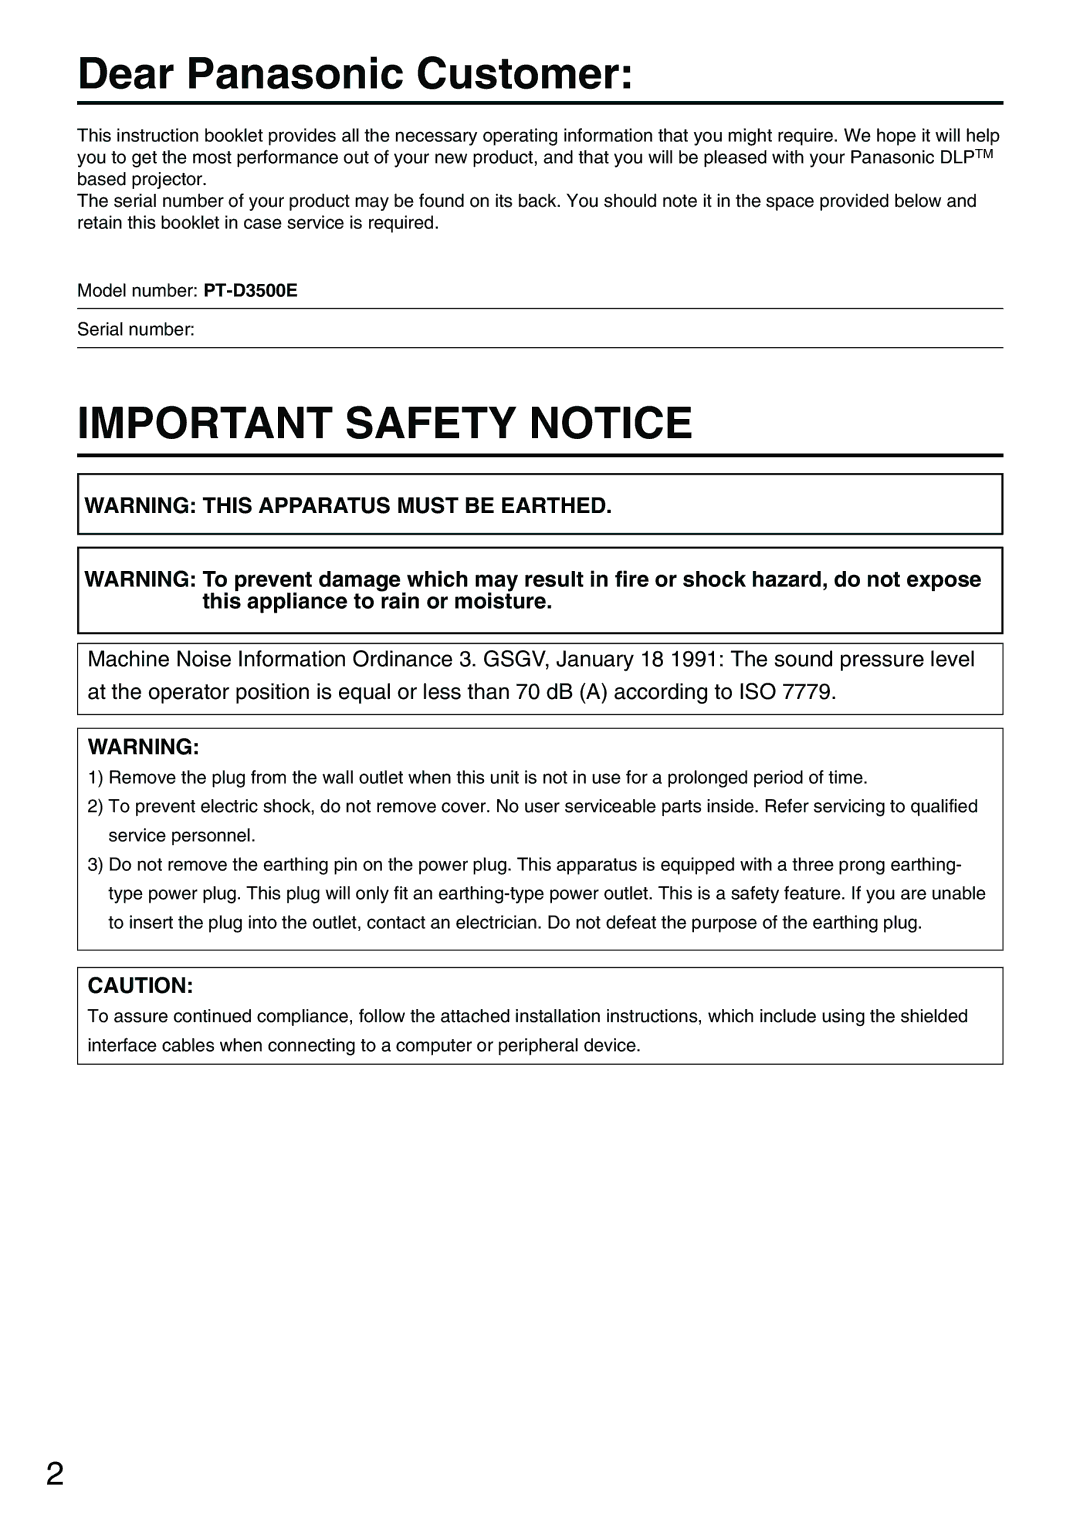 Panasonic PT-D3500E manual Dear Panasonic Customer, Important Safety Notice 